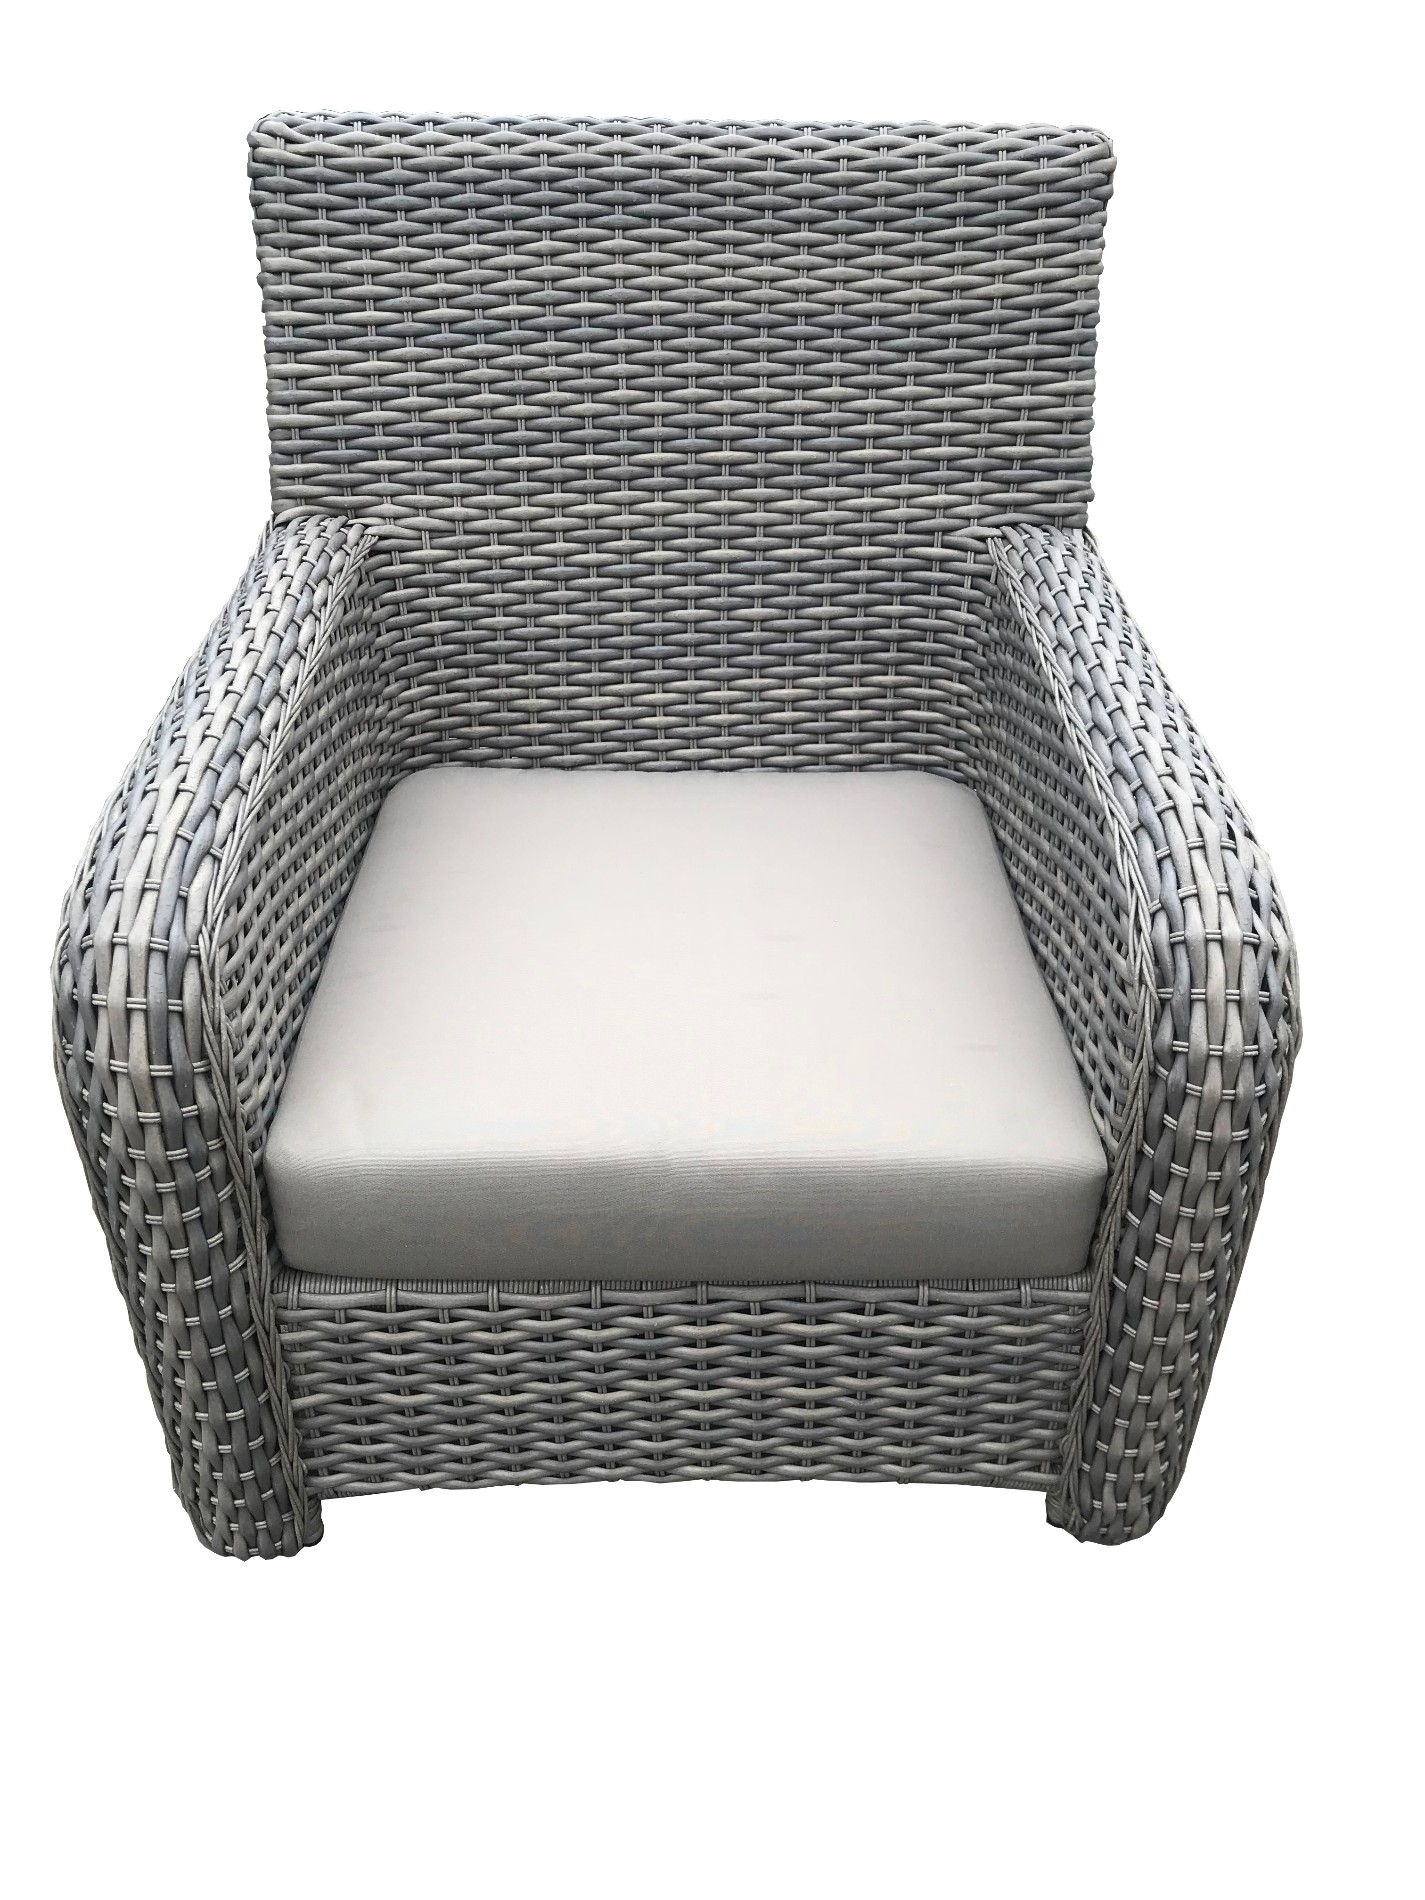 Aluminum Wicker Furniture Rattan Sofa Set